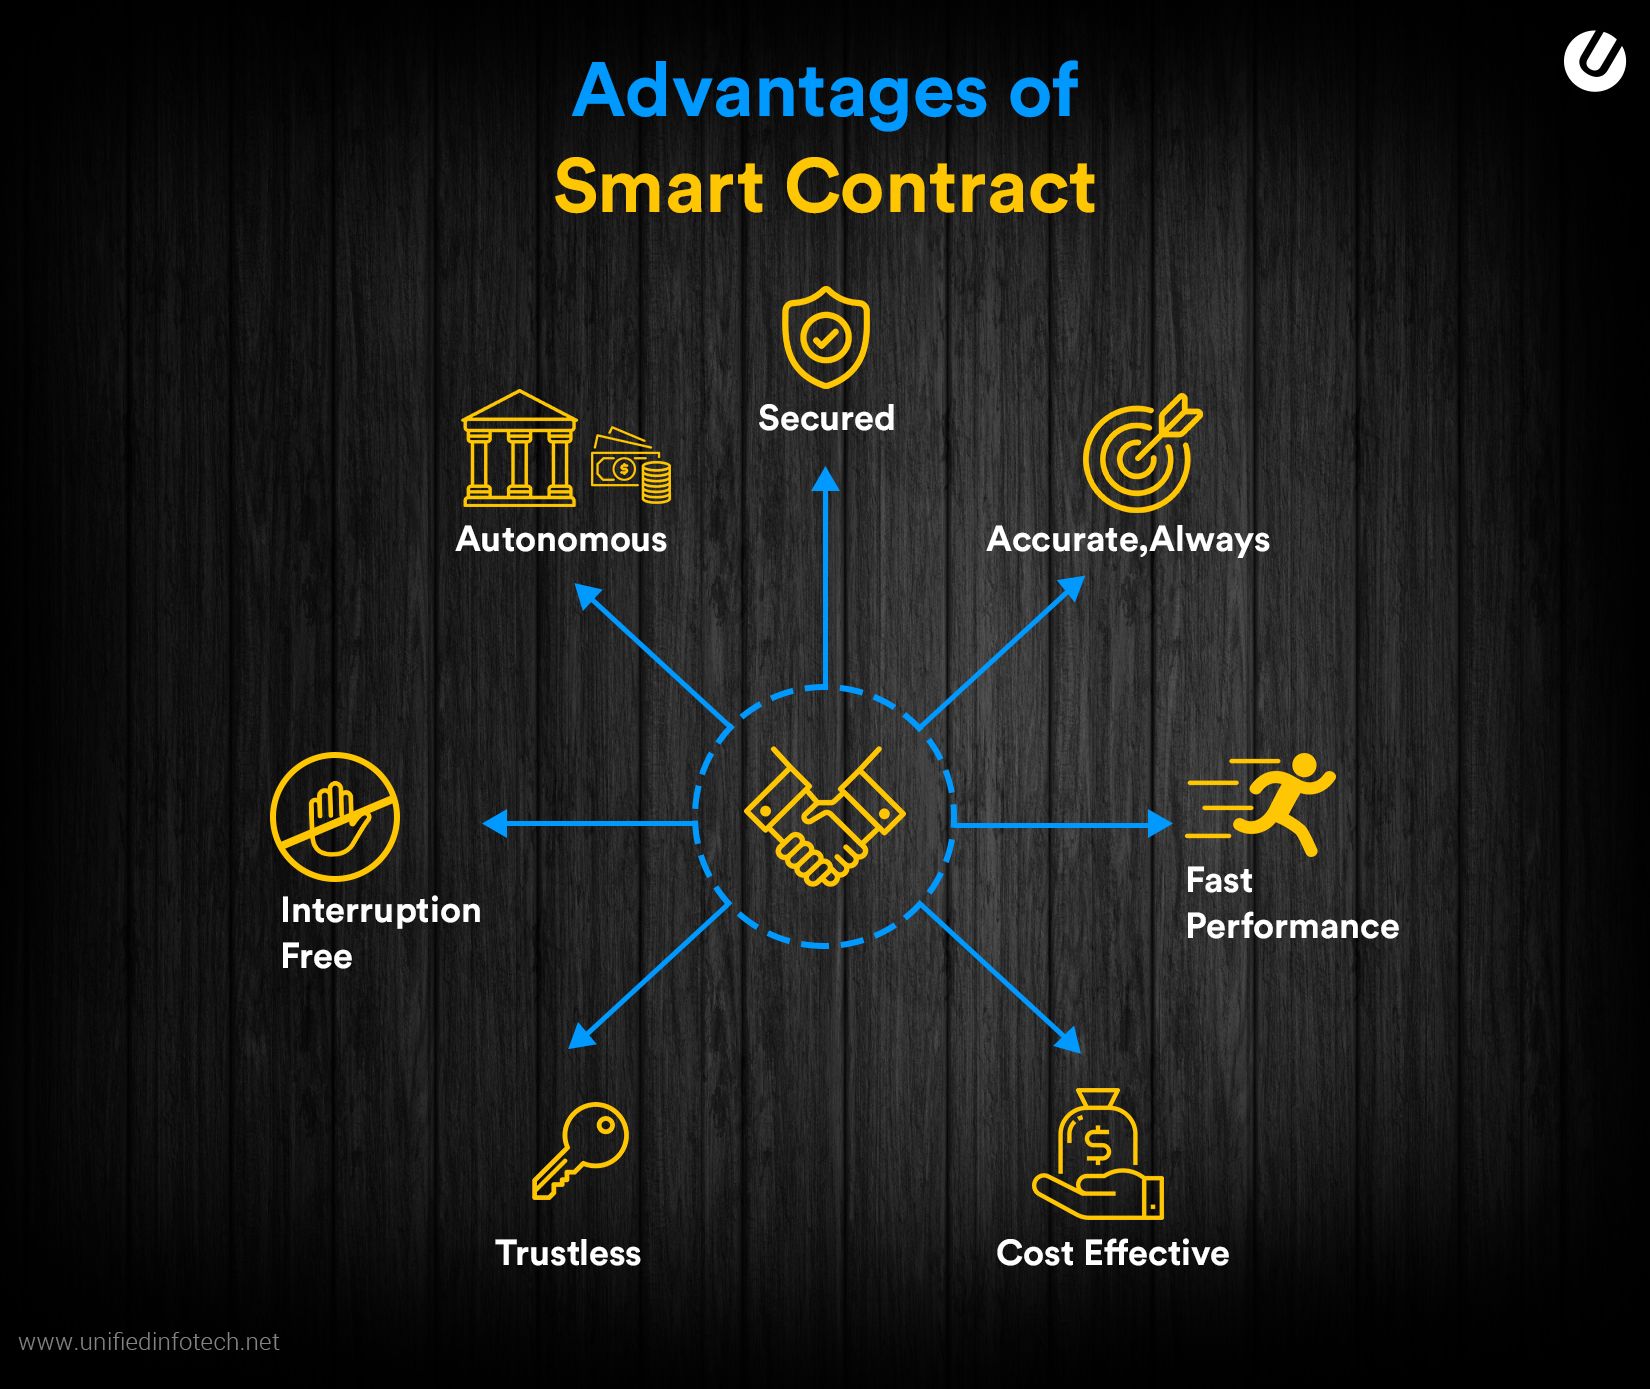 smart contracts development